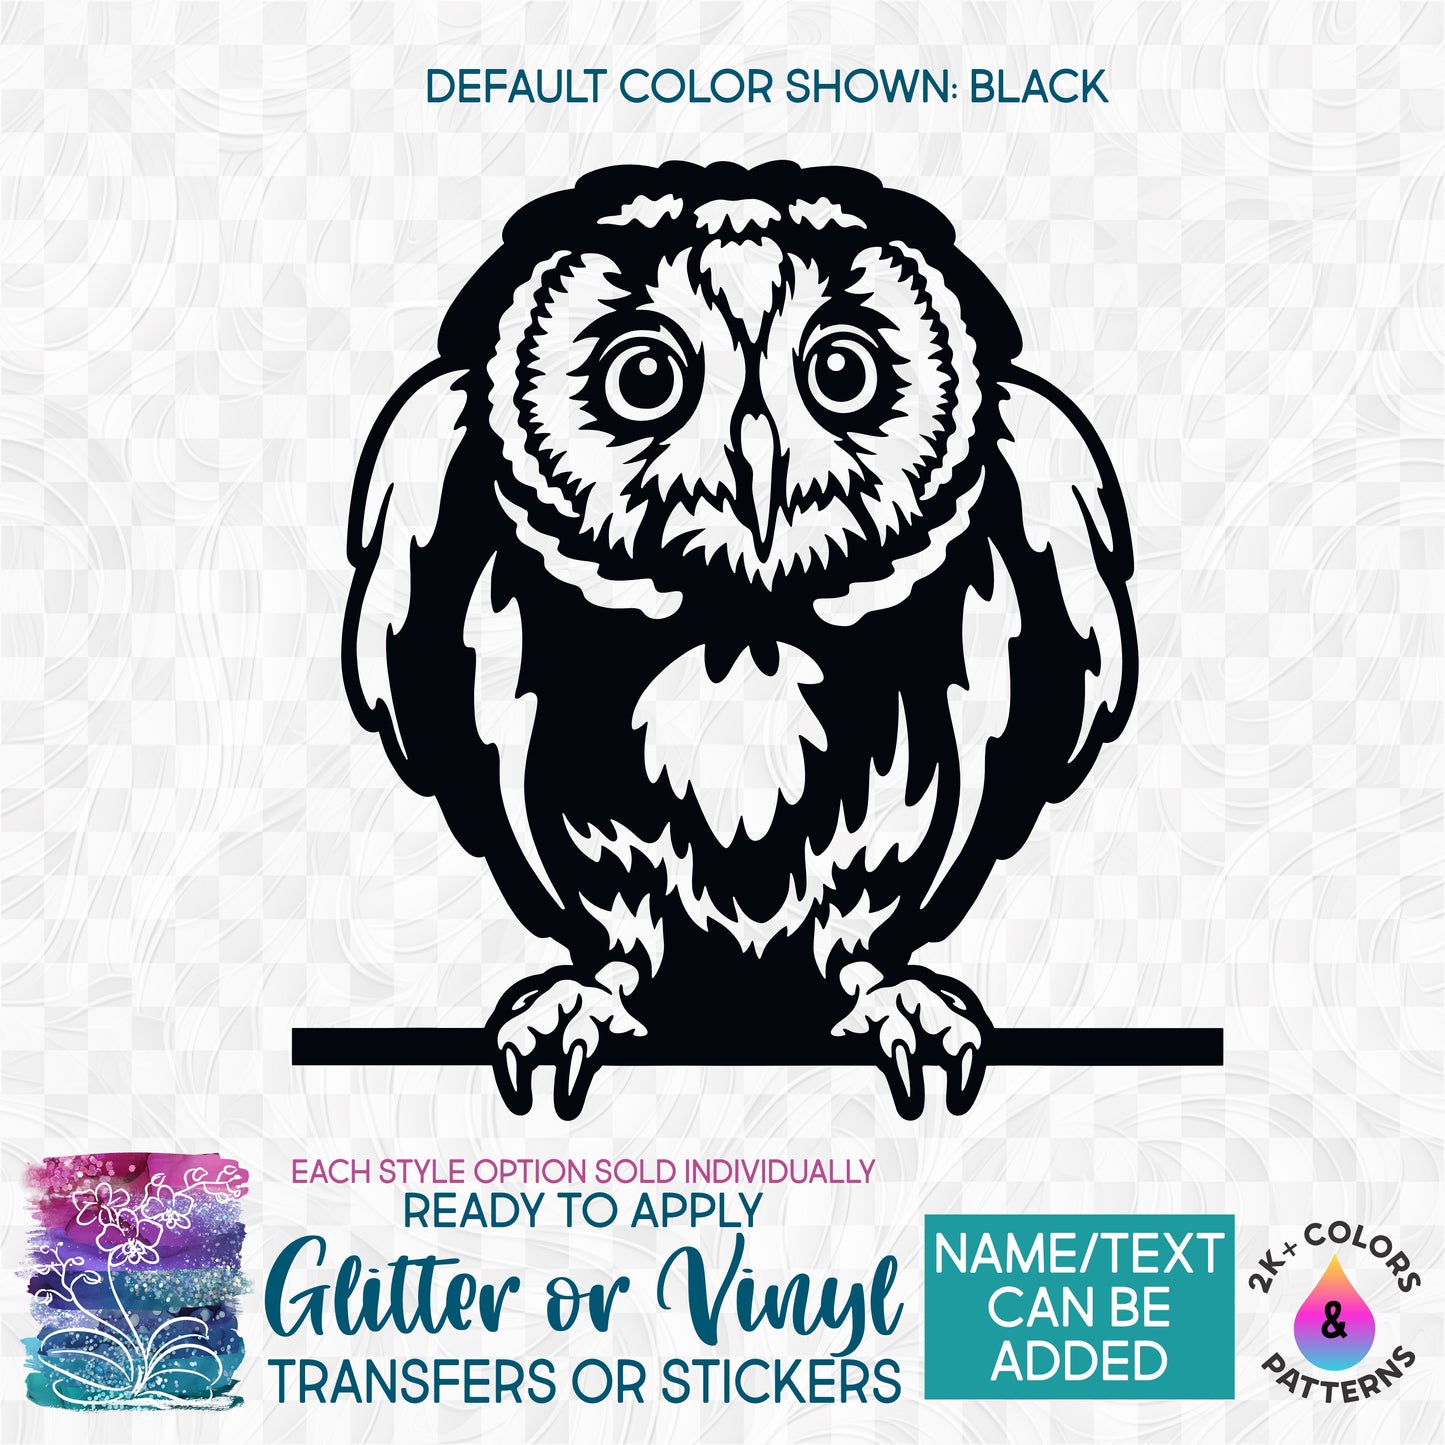 (s356-F2) Peeking Birds Owl Glitter or Vinyl Iron-On Transfer or Sticker